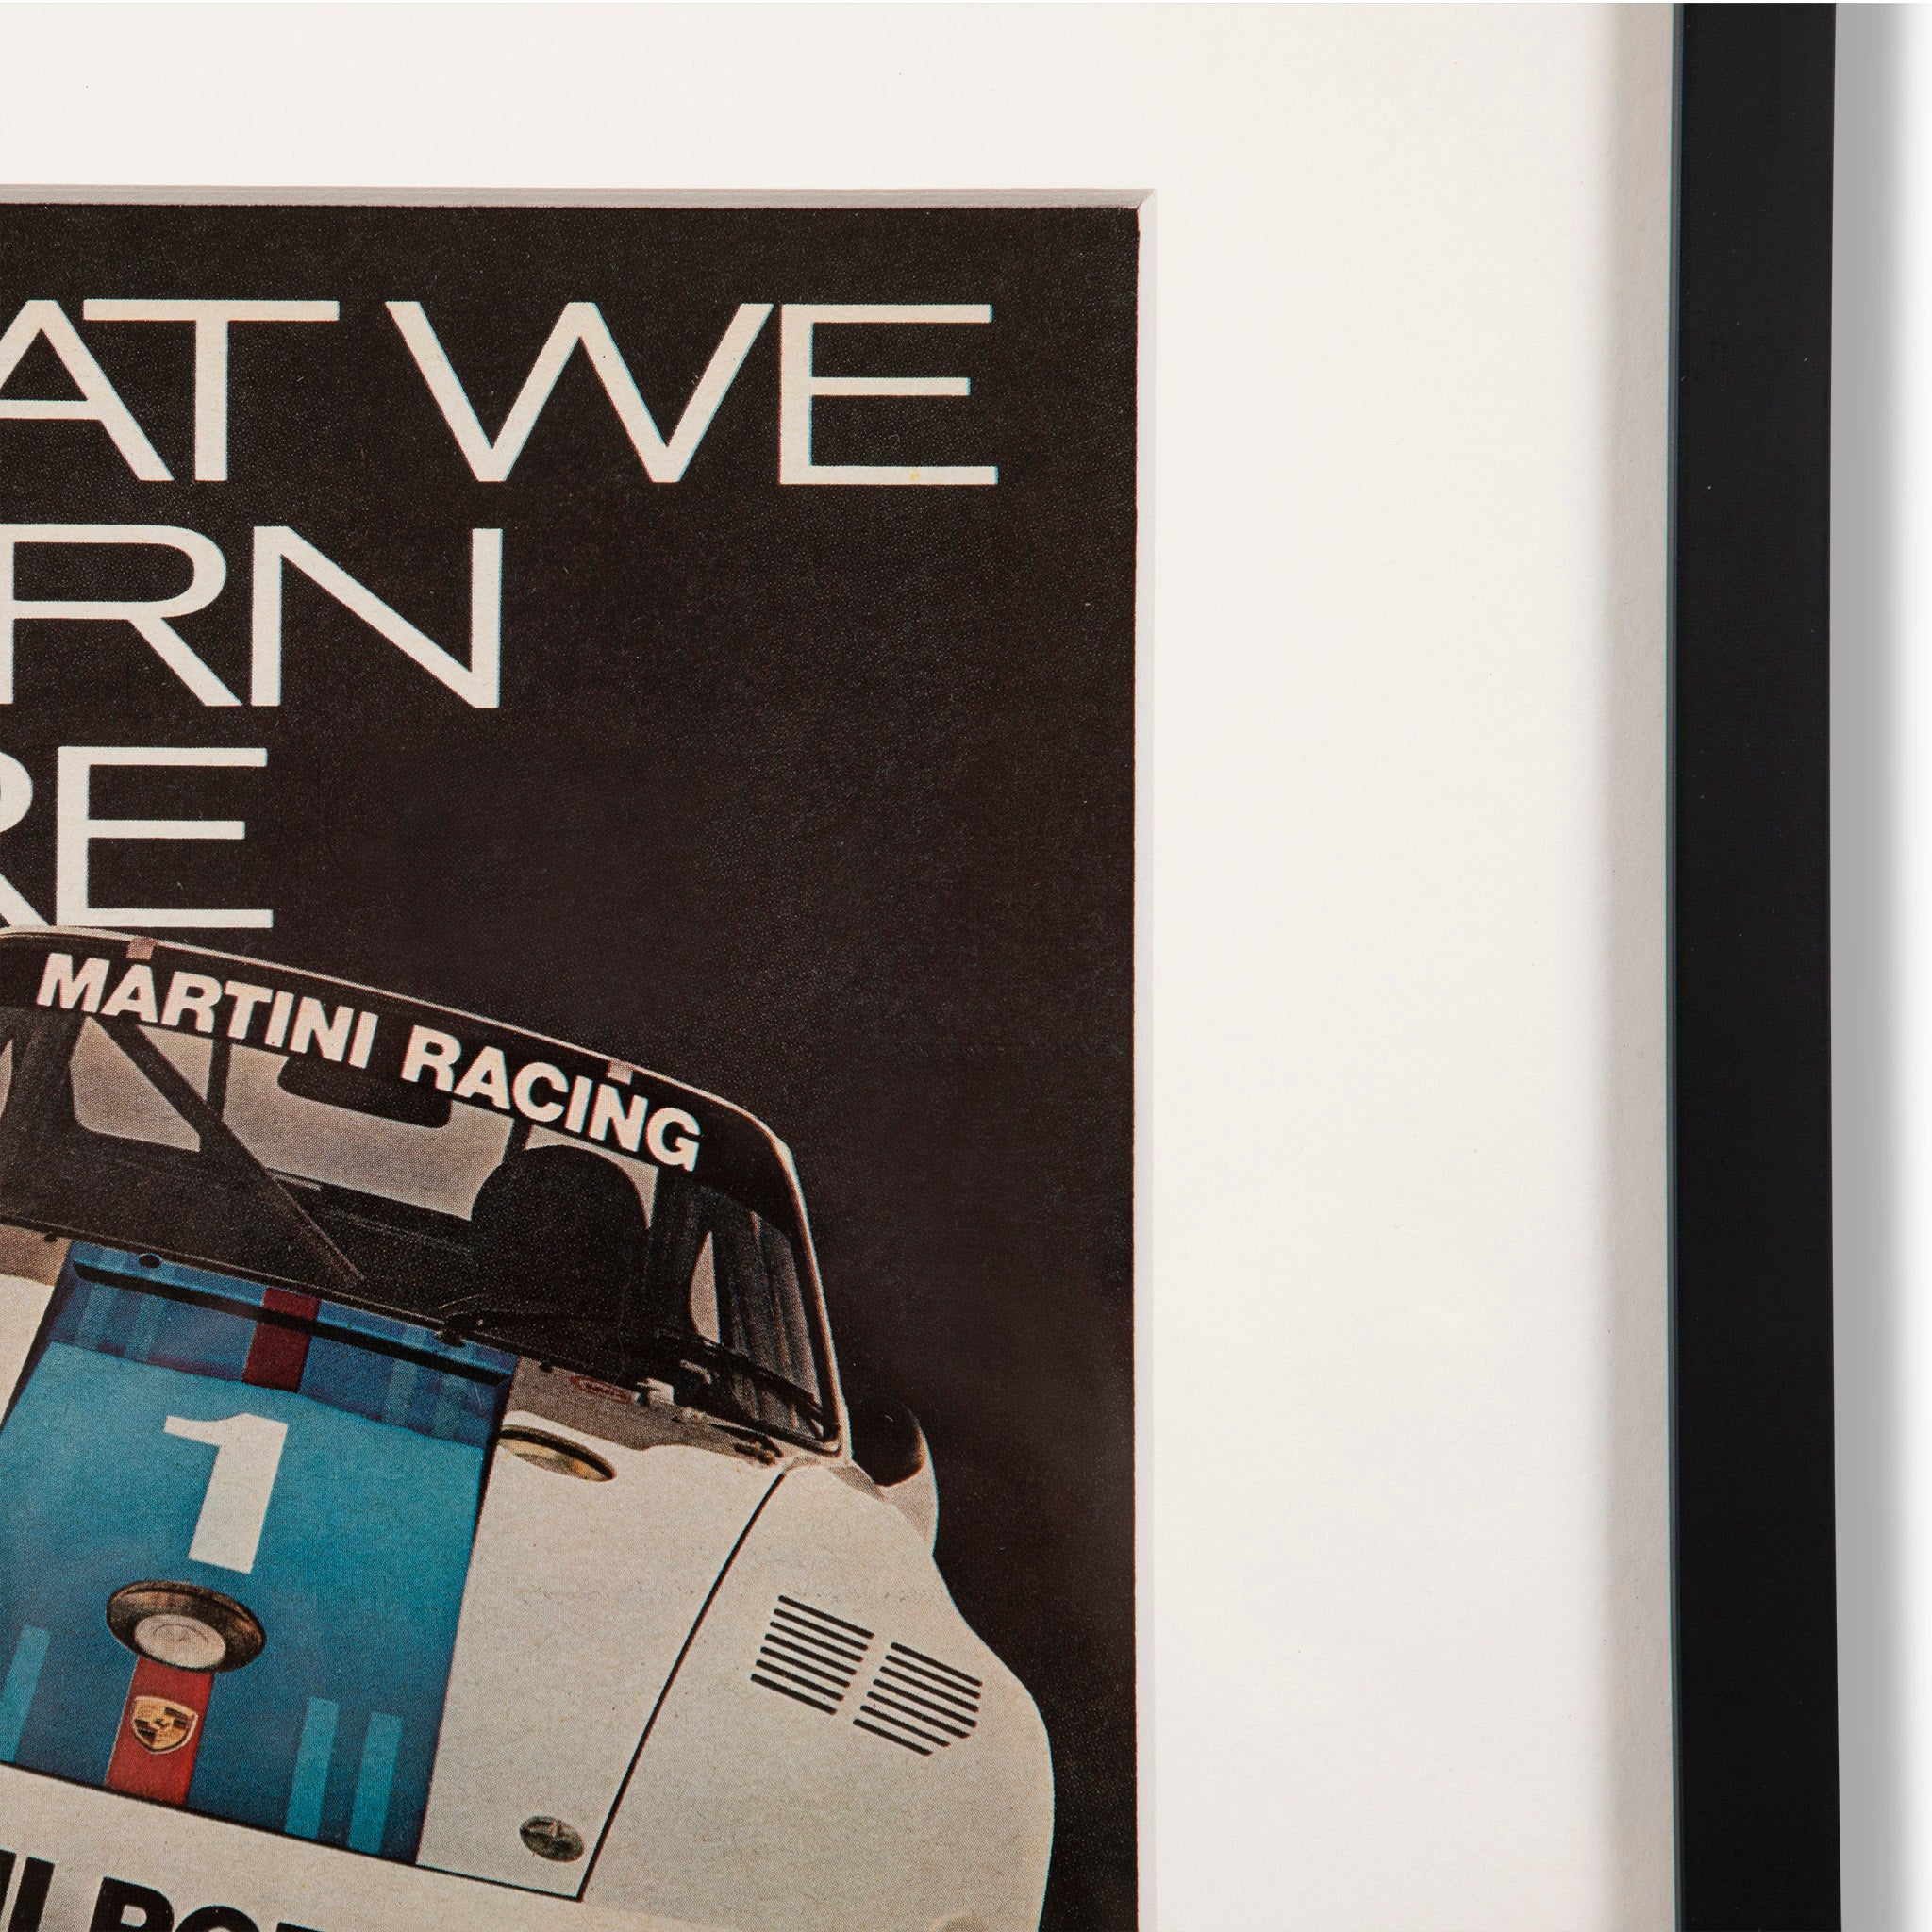 Vintage Martini Porsche Racing Advertisement